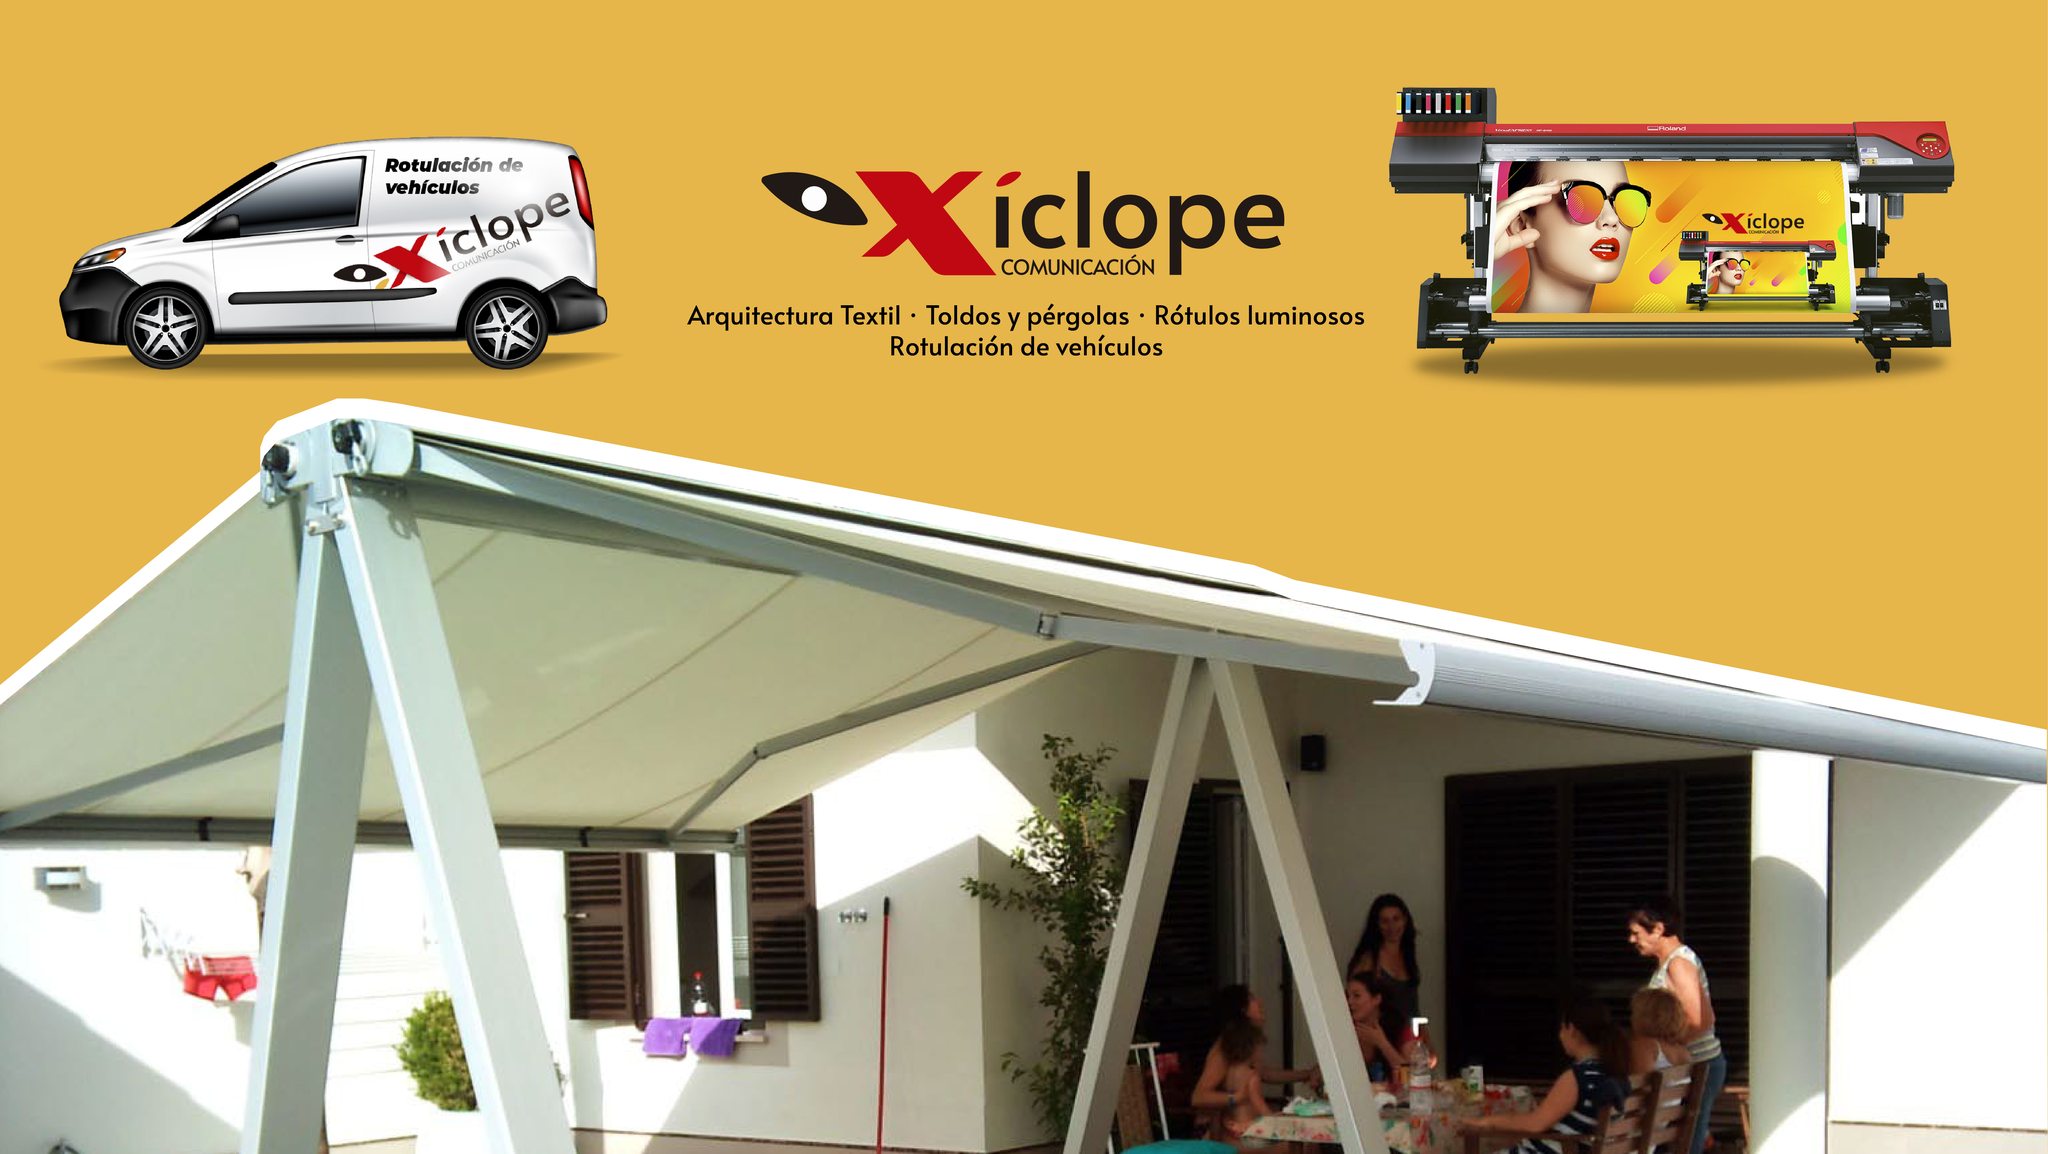 (c) Xiclope.com